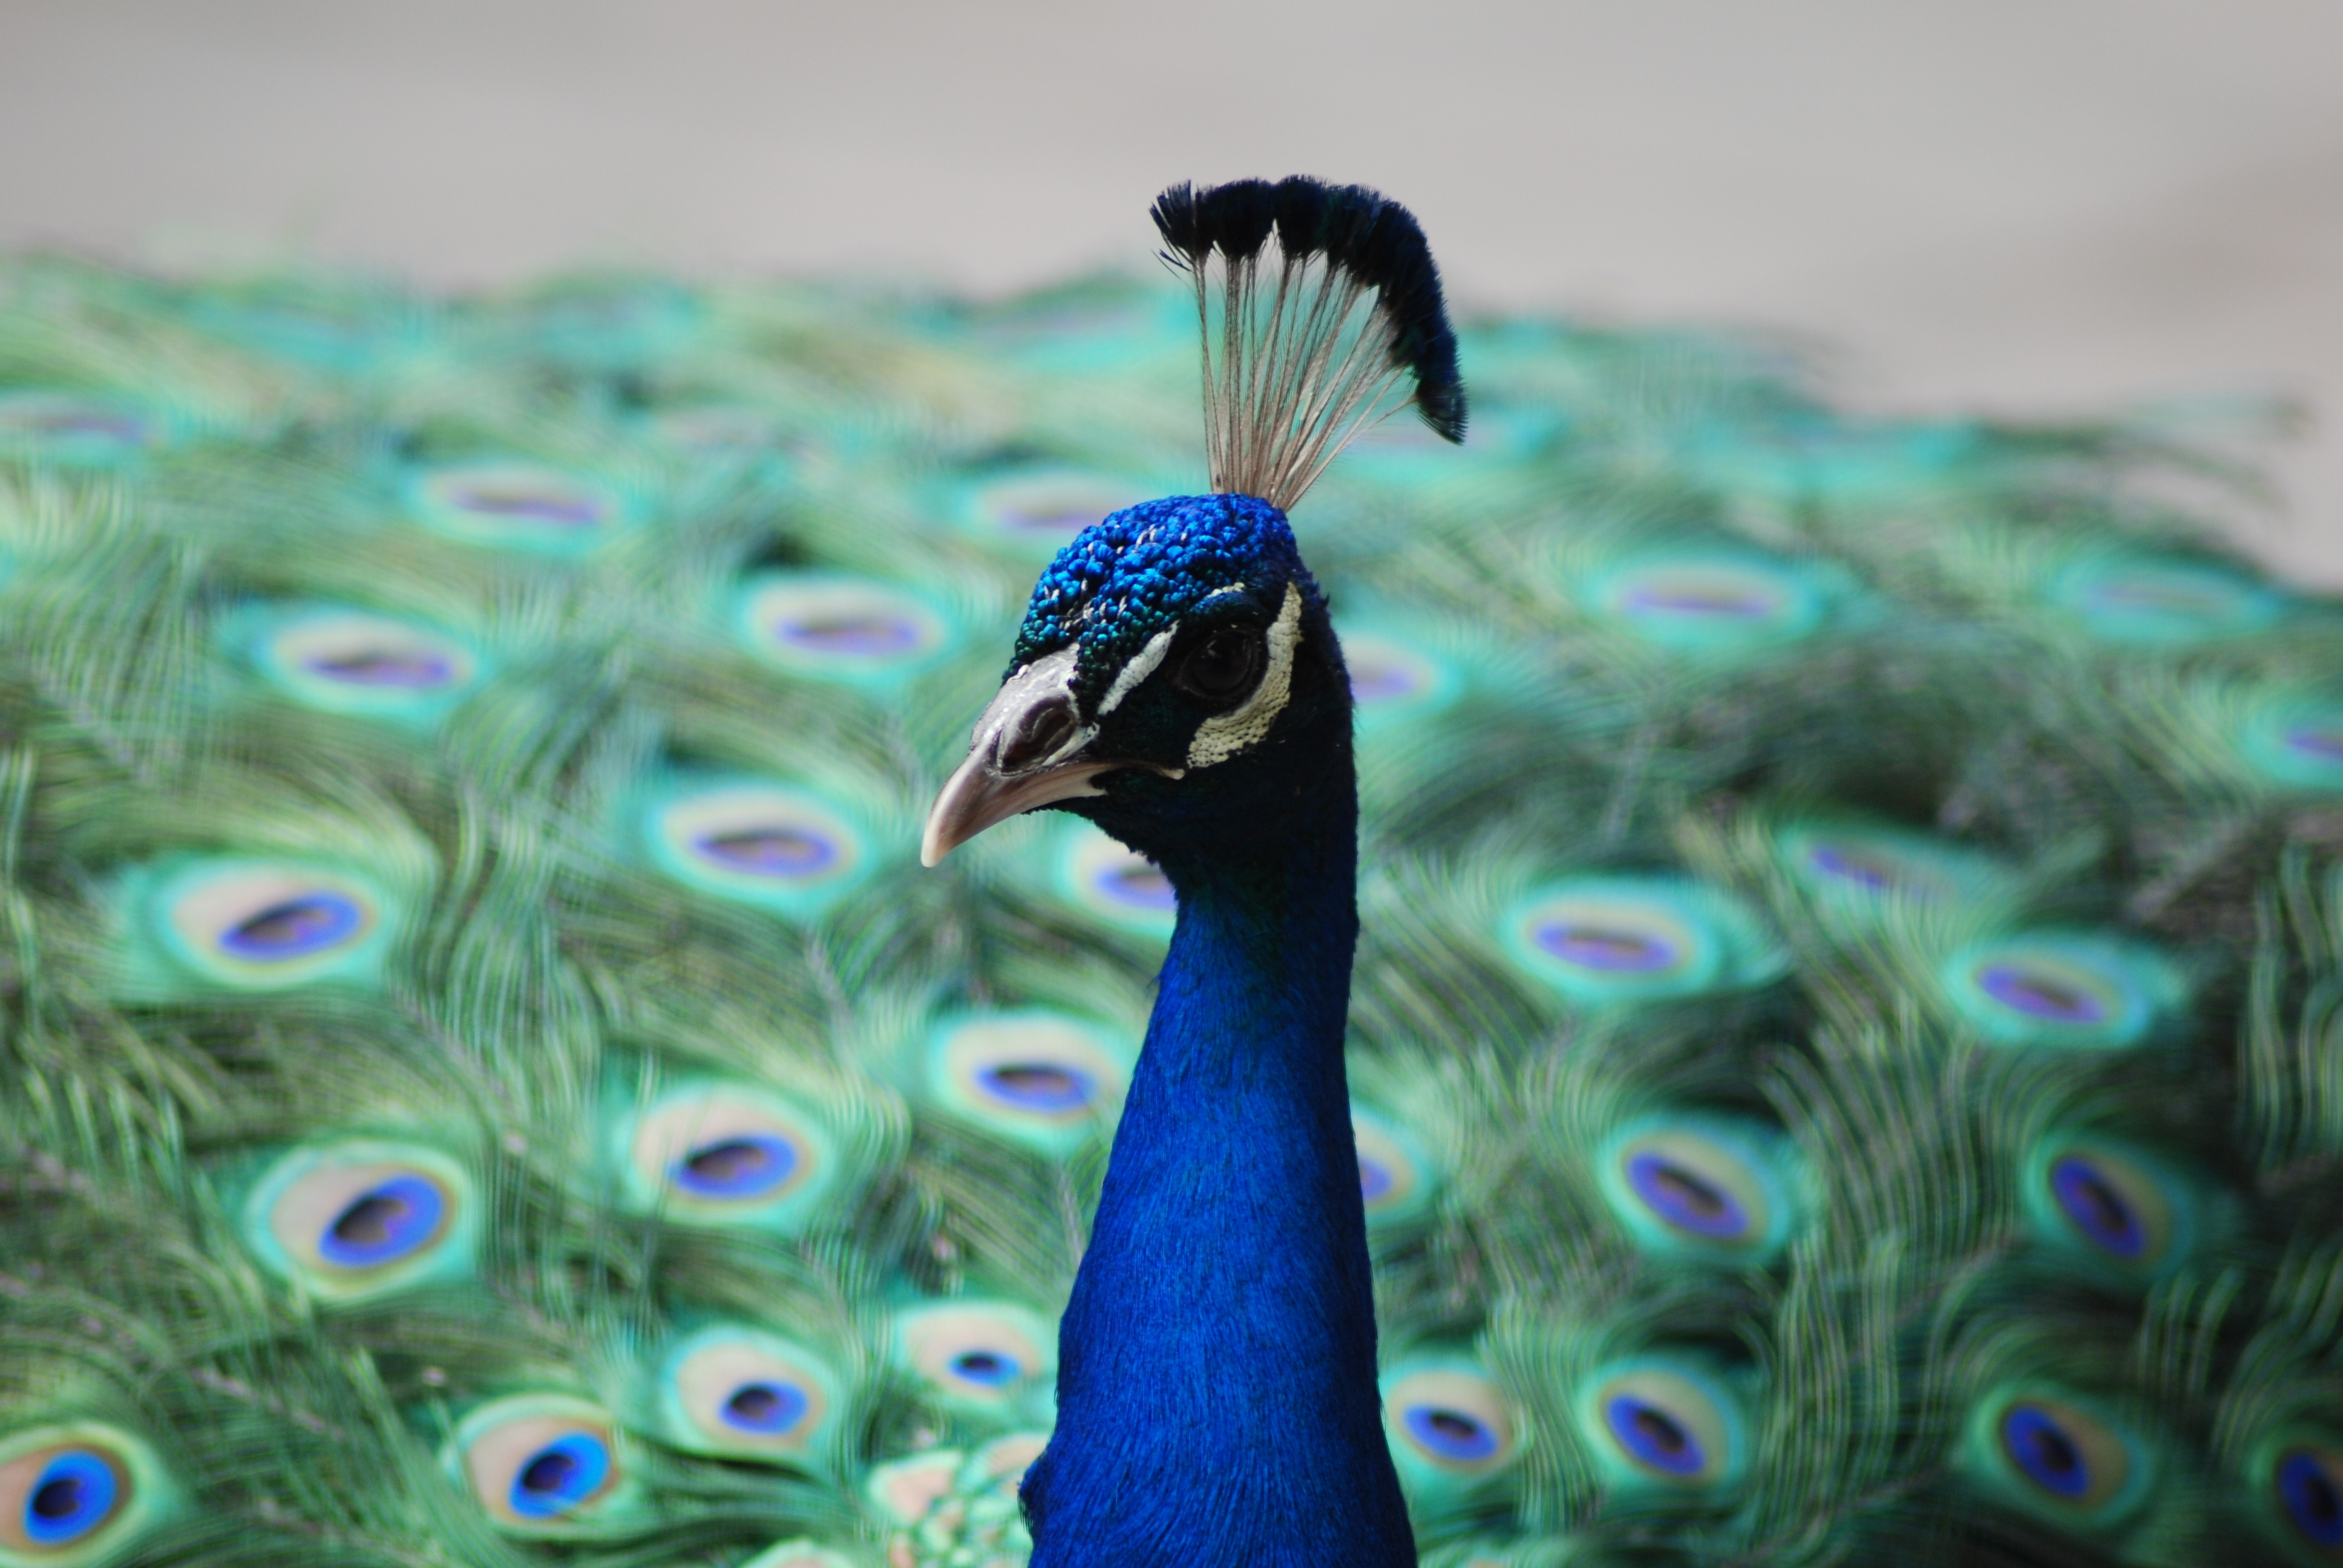 хвост павлин перья tail peacock feathers загрузить